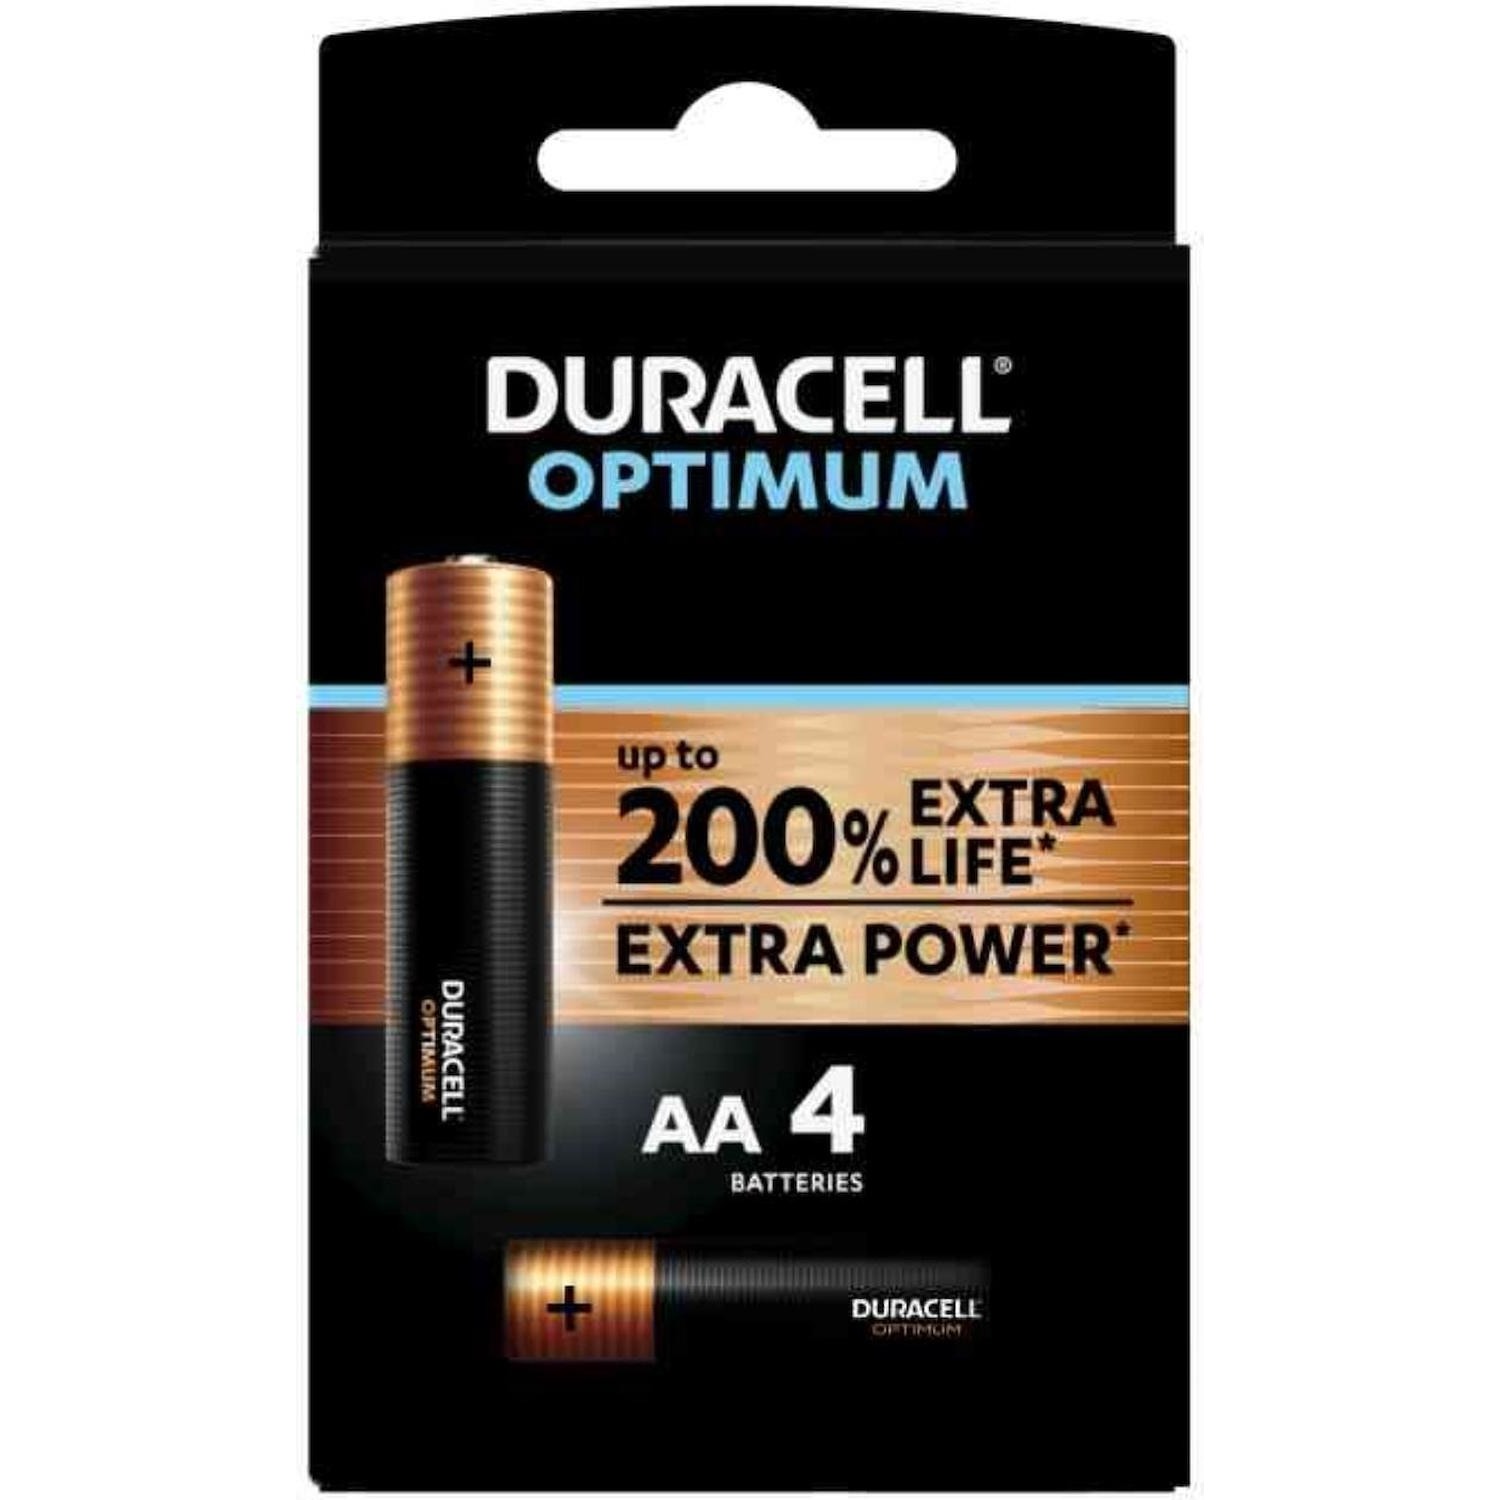 Immagine per Batteria pila stilo alcalina Duracell Optimum AA  blister 4pz da DIMOStore